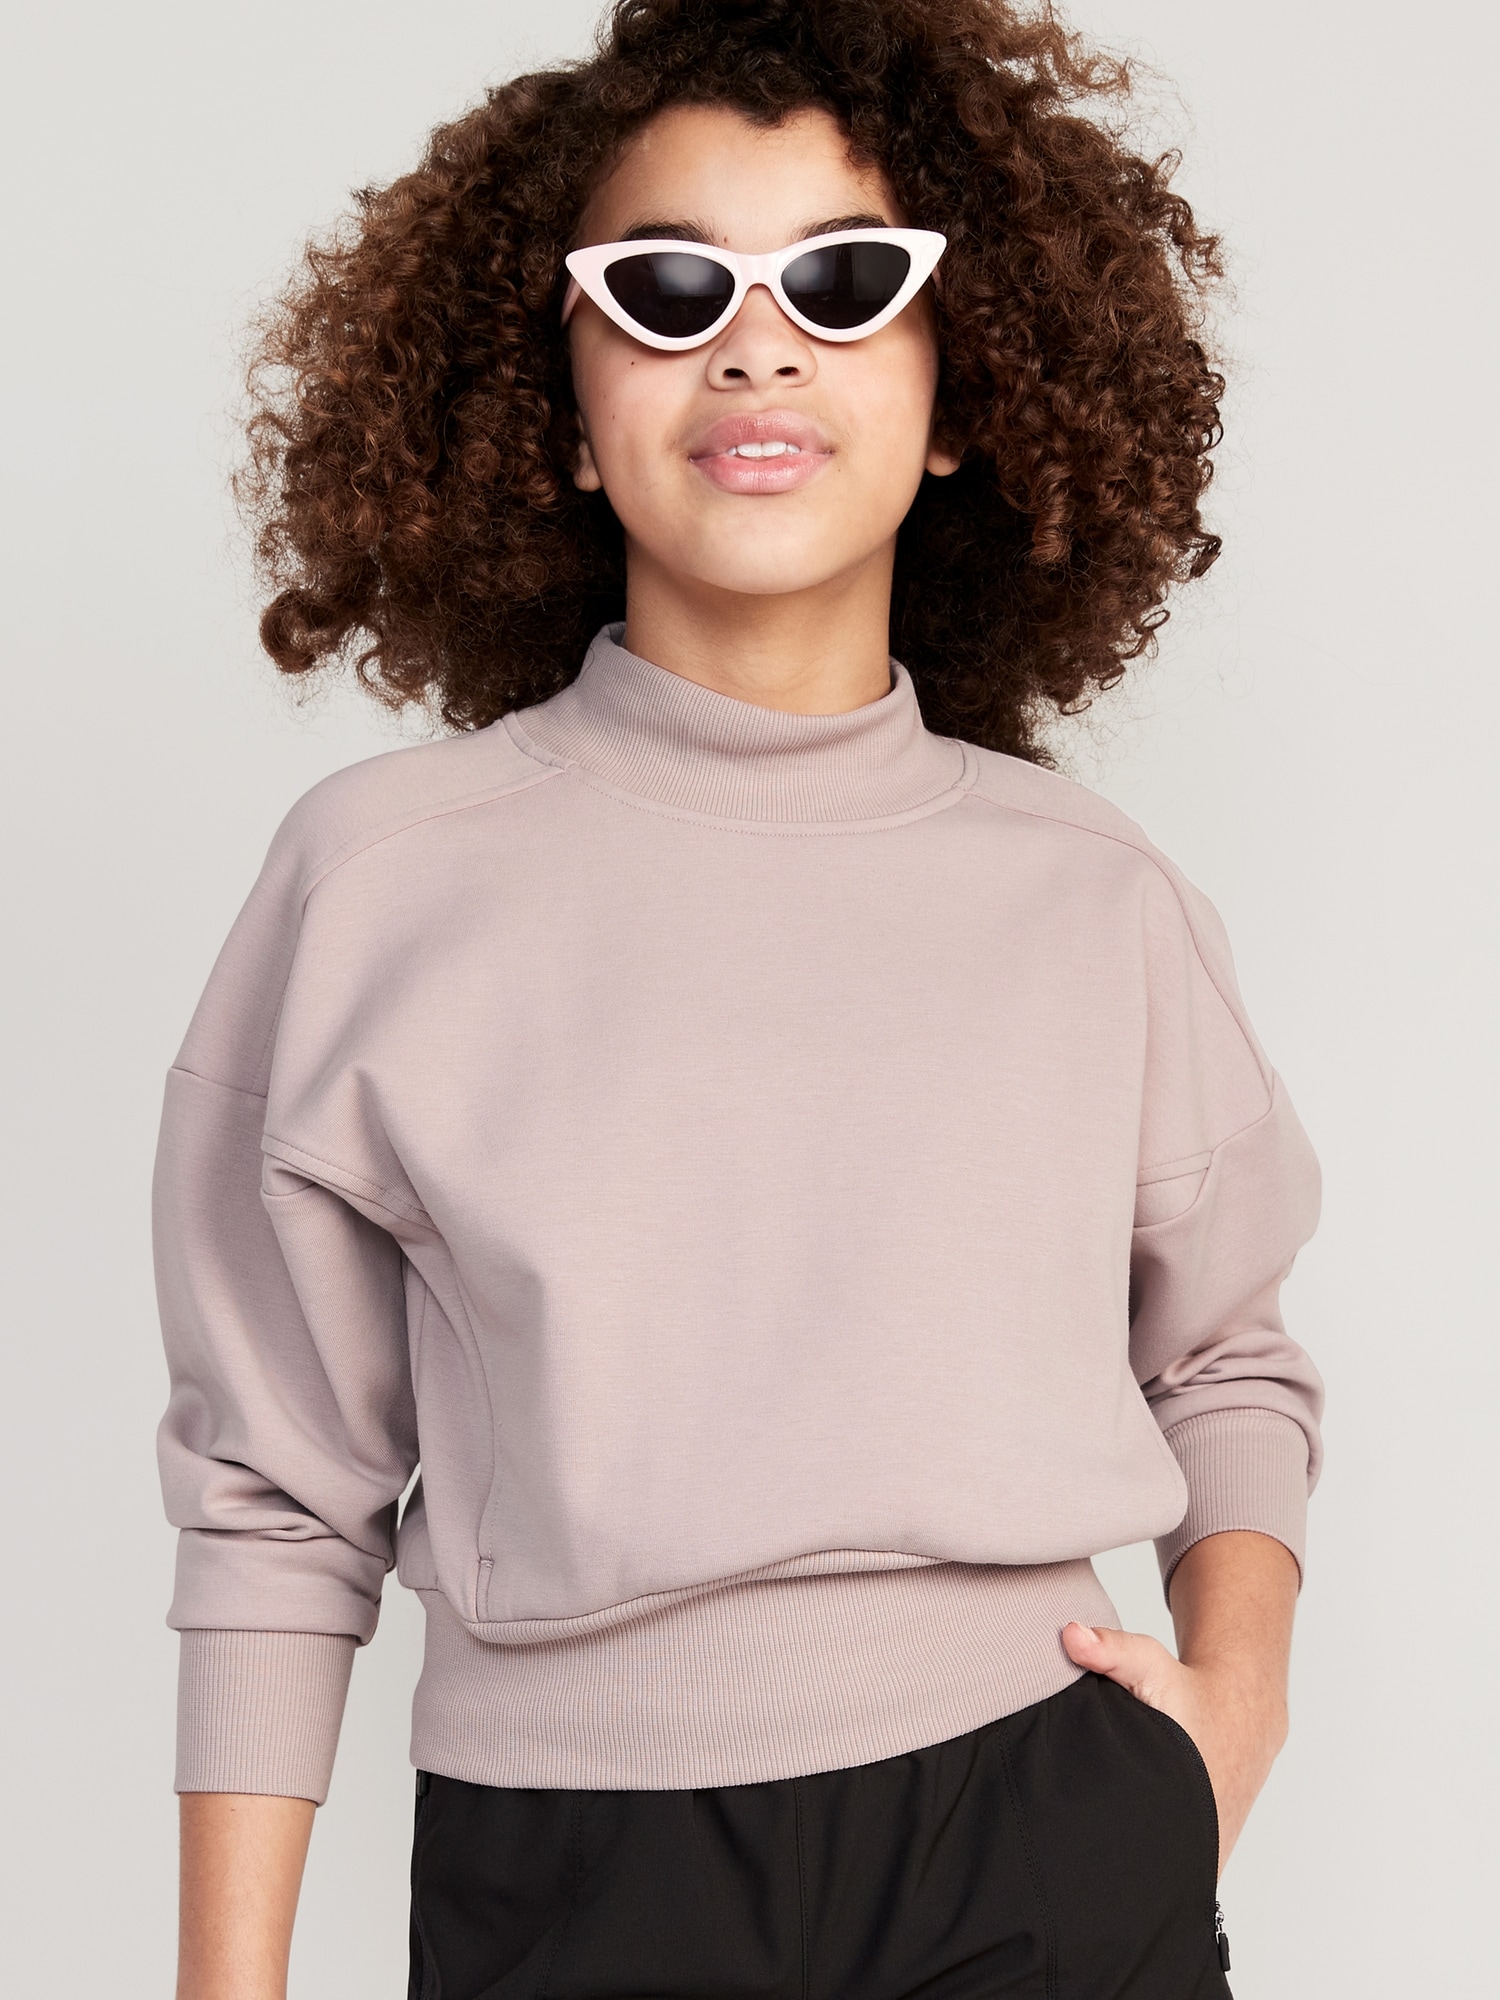 Old Navy Dynamic Fleece Mock-Neck Hidden-Pocket Sweatshirt for Girls pink. 1